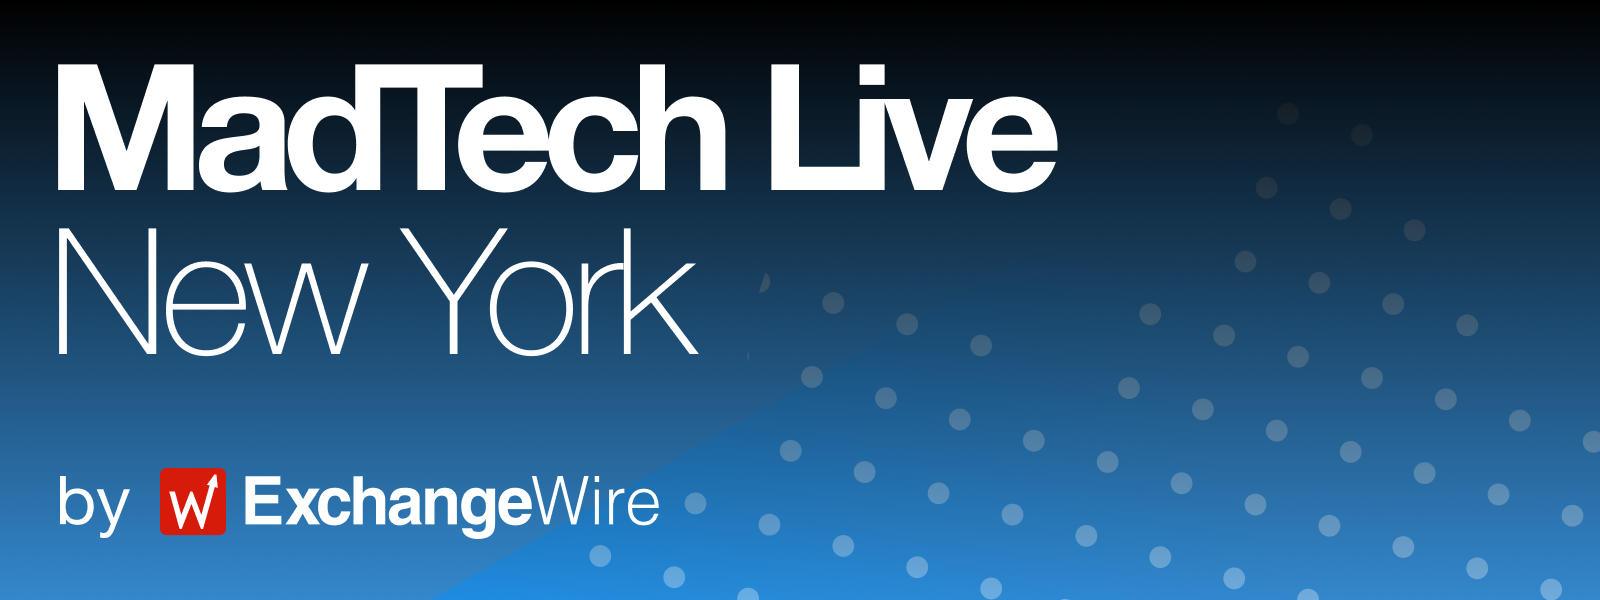 Madtech Live New York 2019 Exchangewire Com